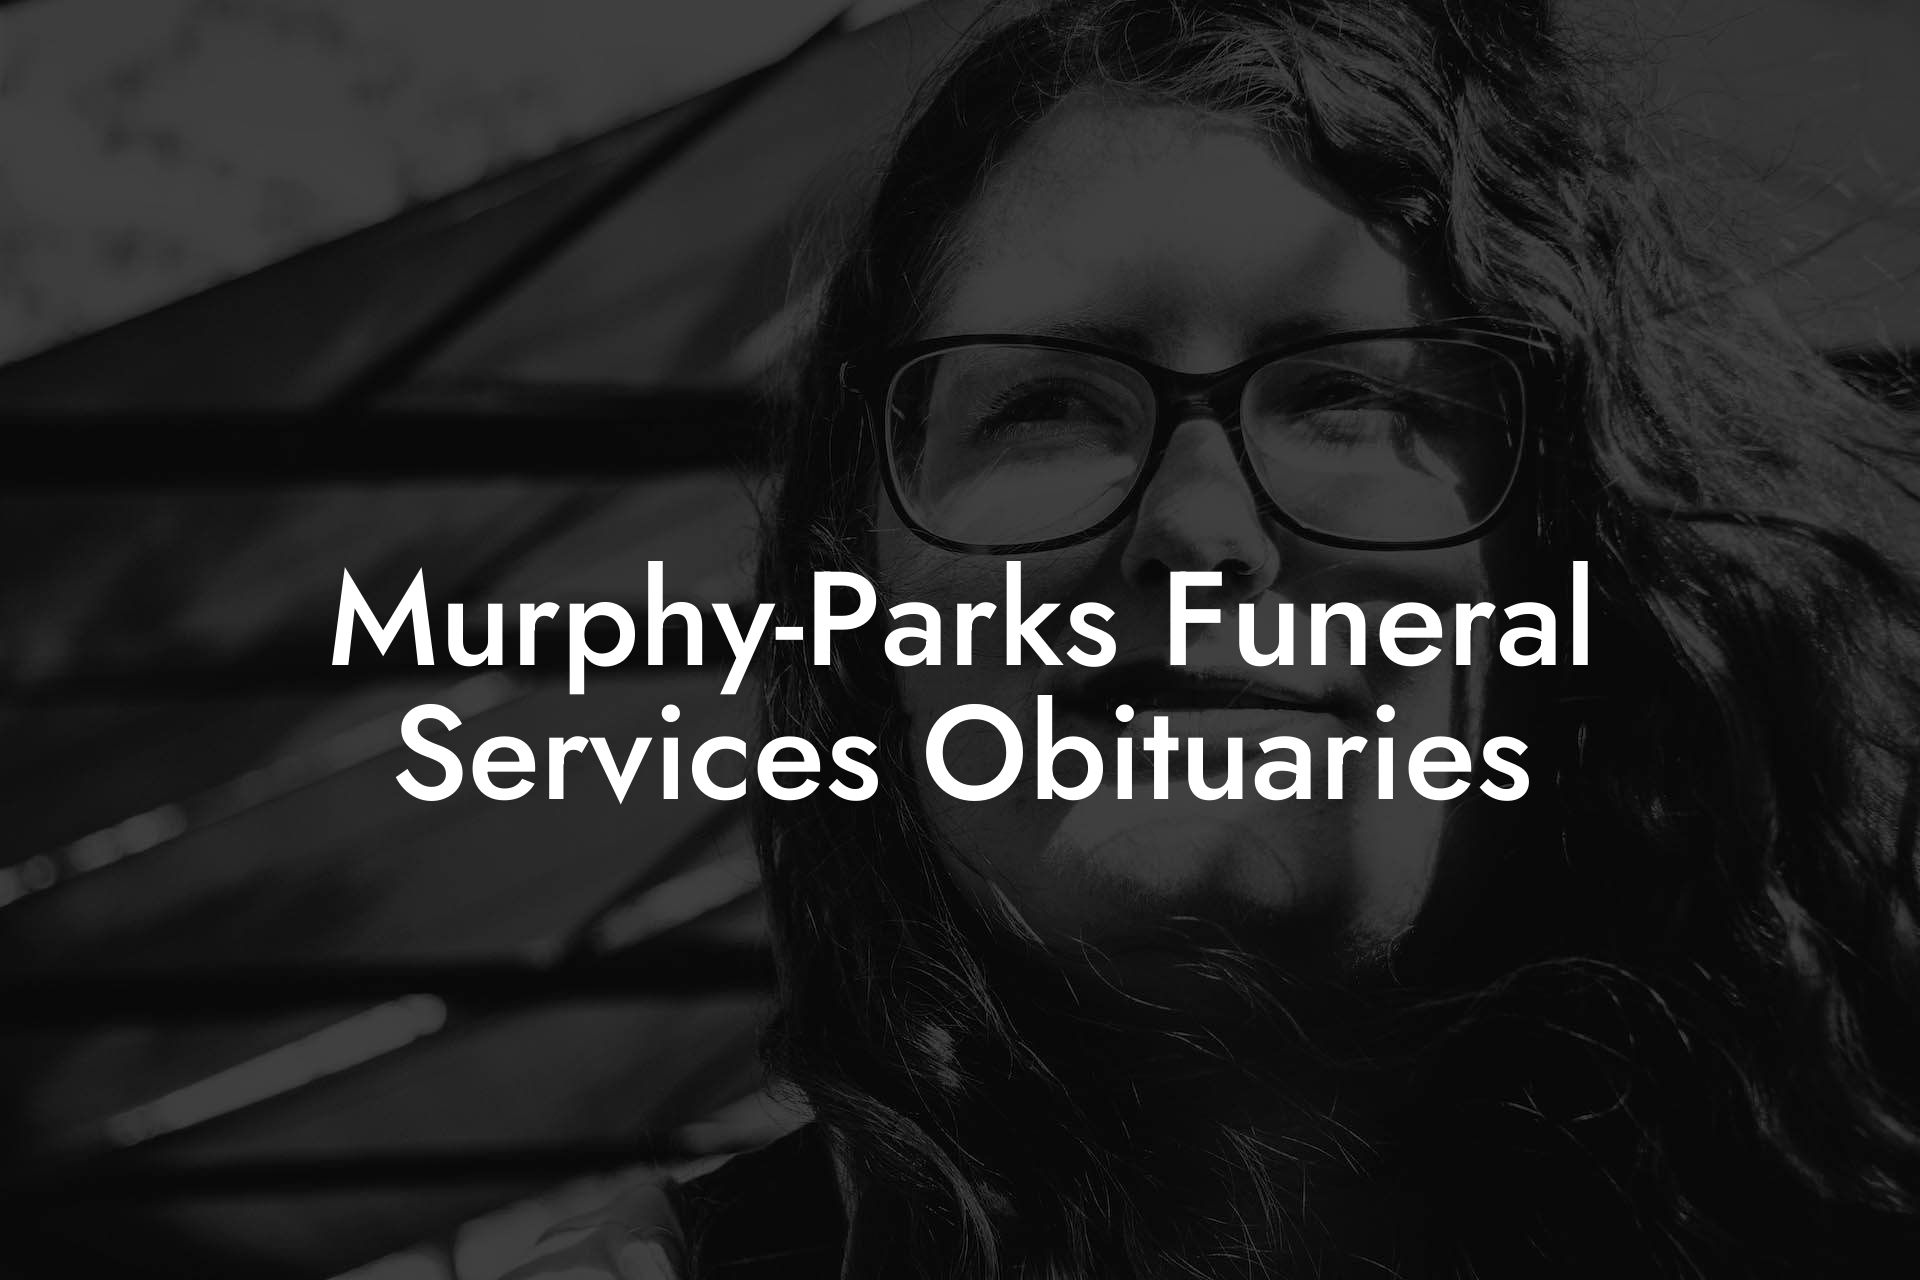 Murphy-Parks Funeral Services Obituaries